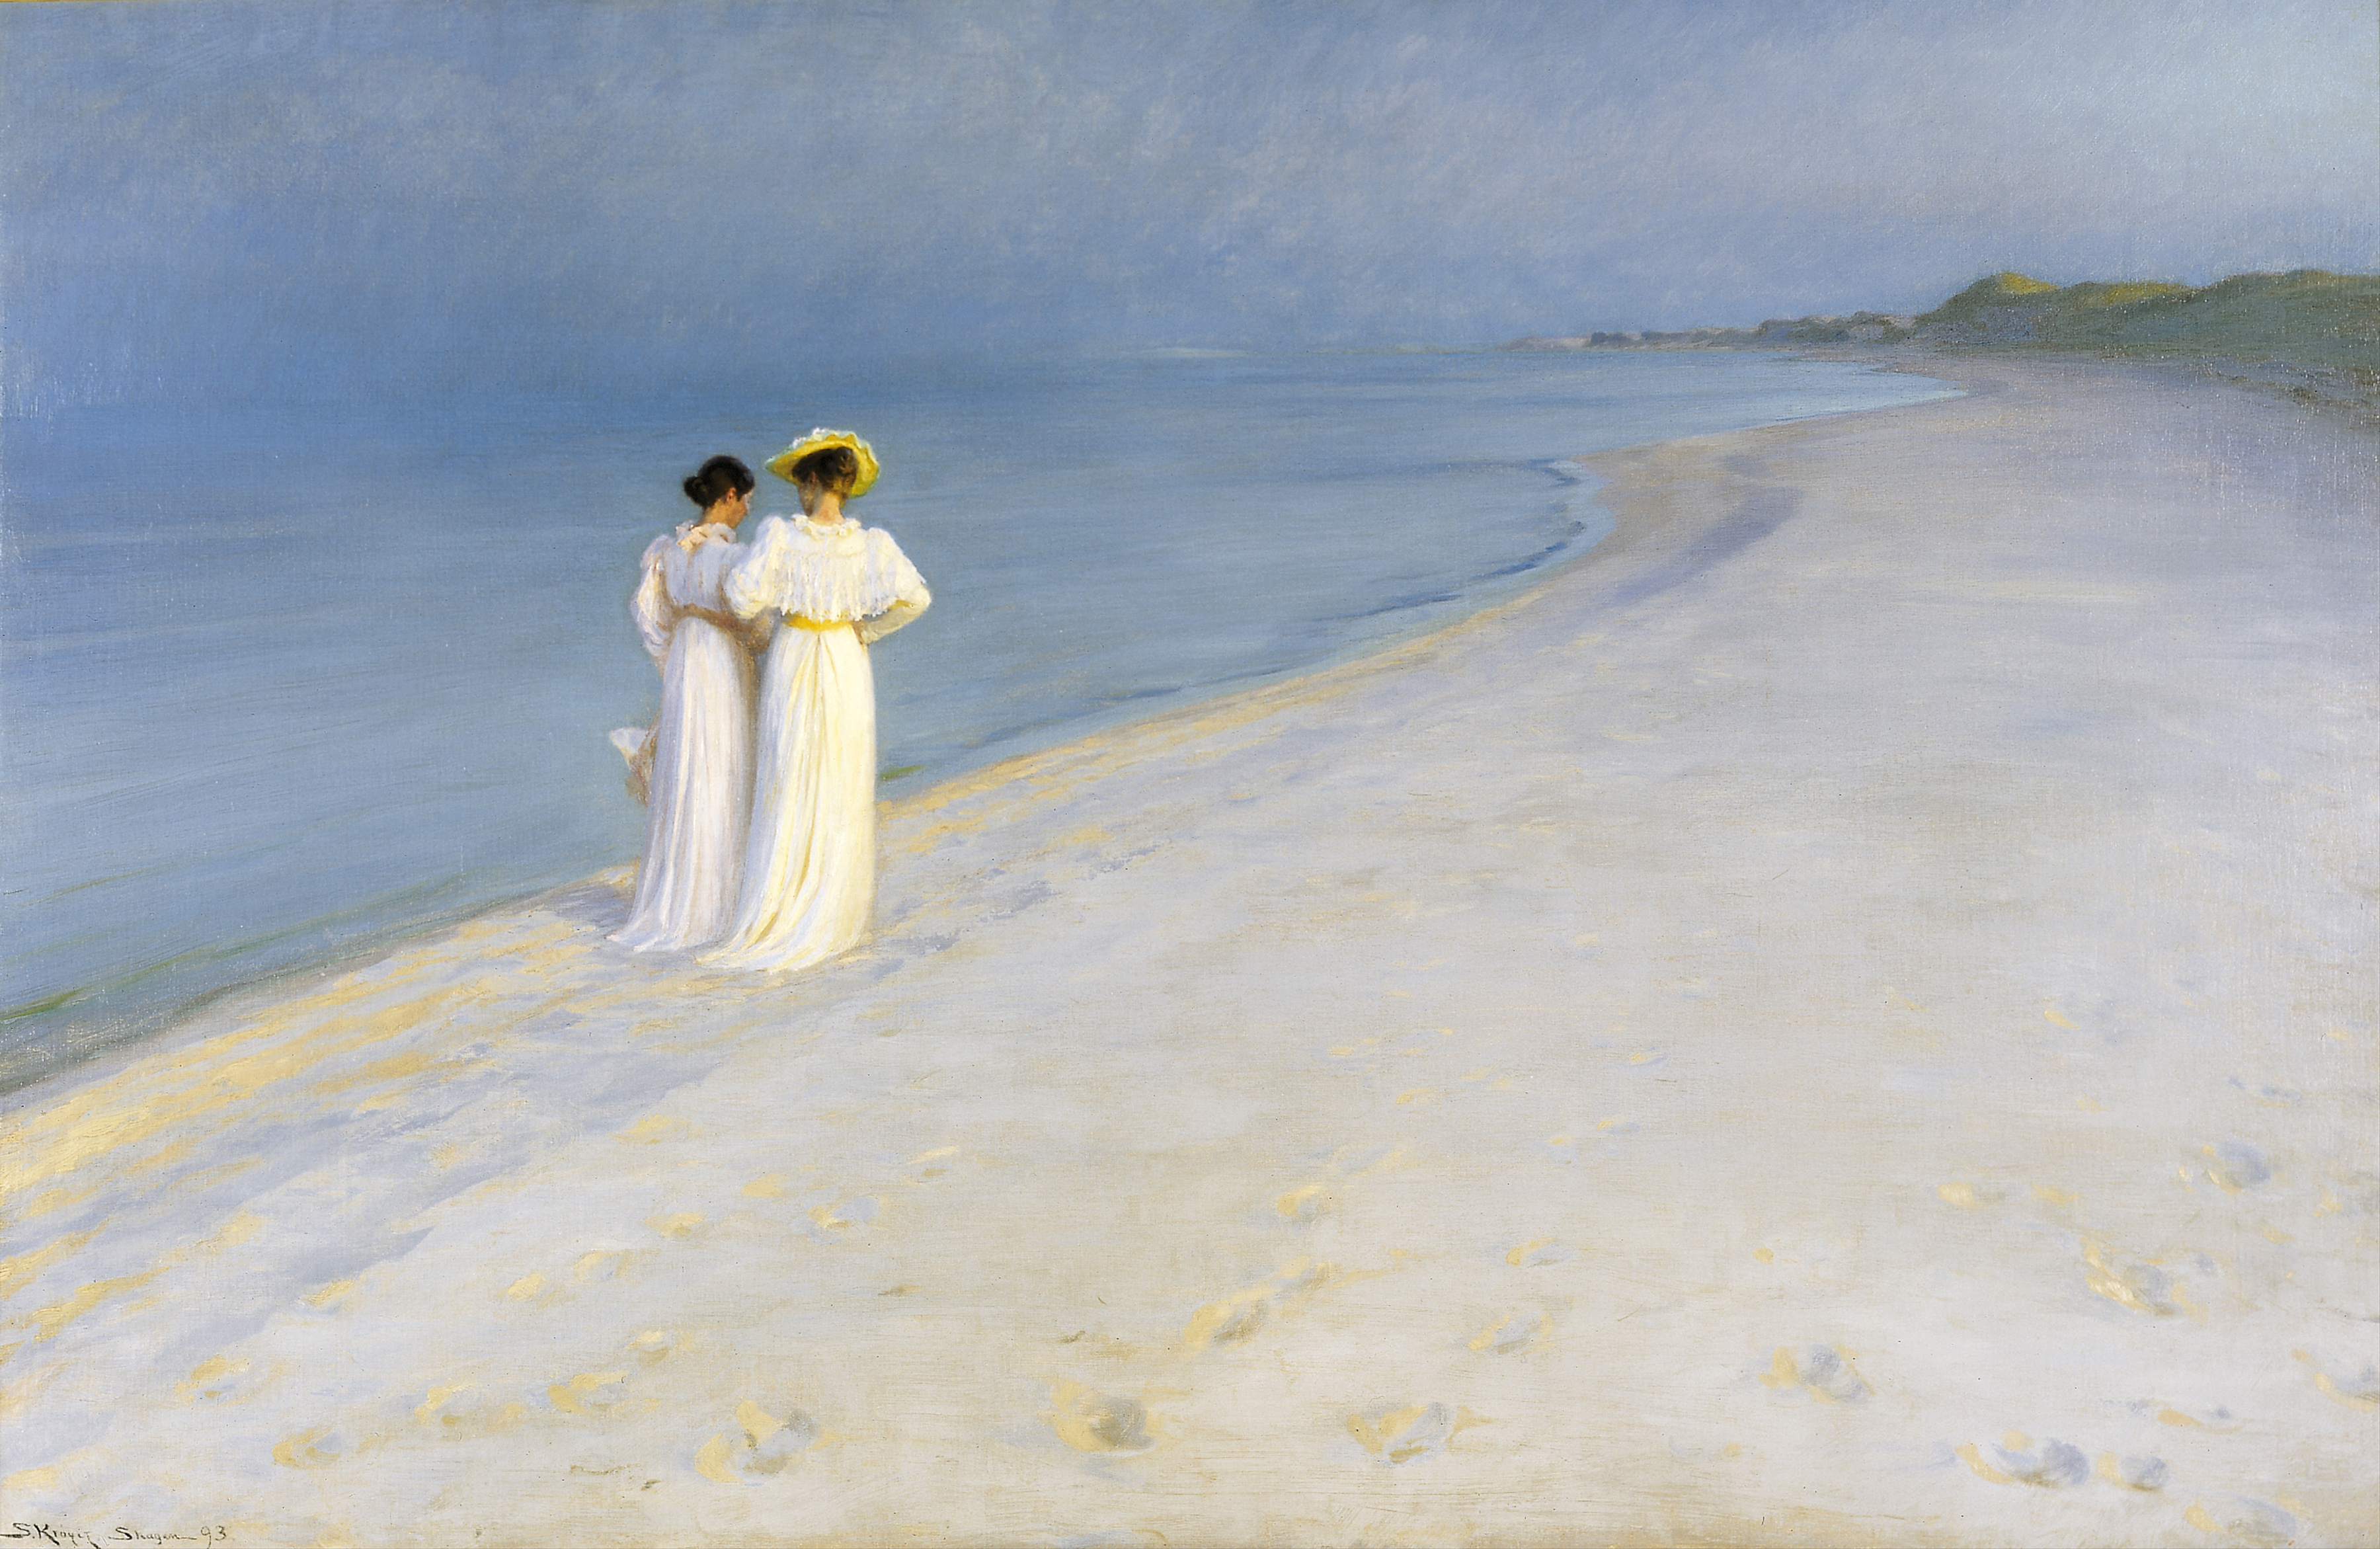 P.S. Krøyer - Summer evening on Skagen's Beach. Anna Ancher and Marie Krøyer walking together. - Google Art Project